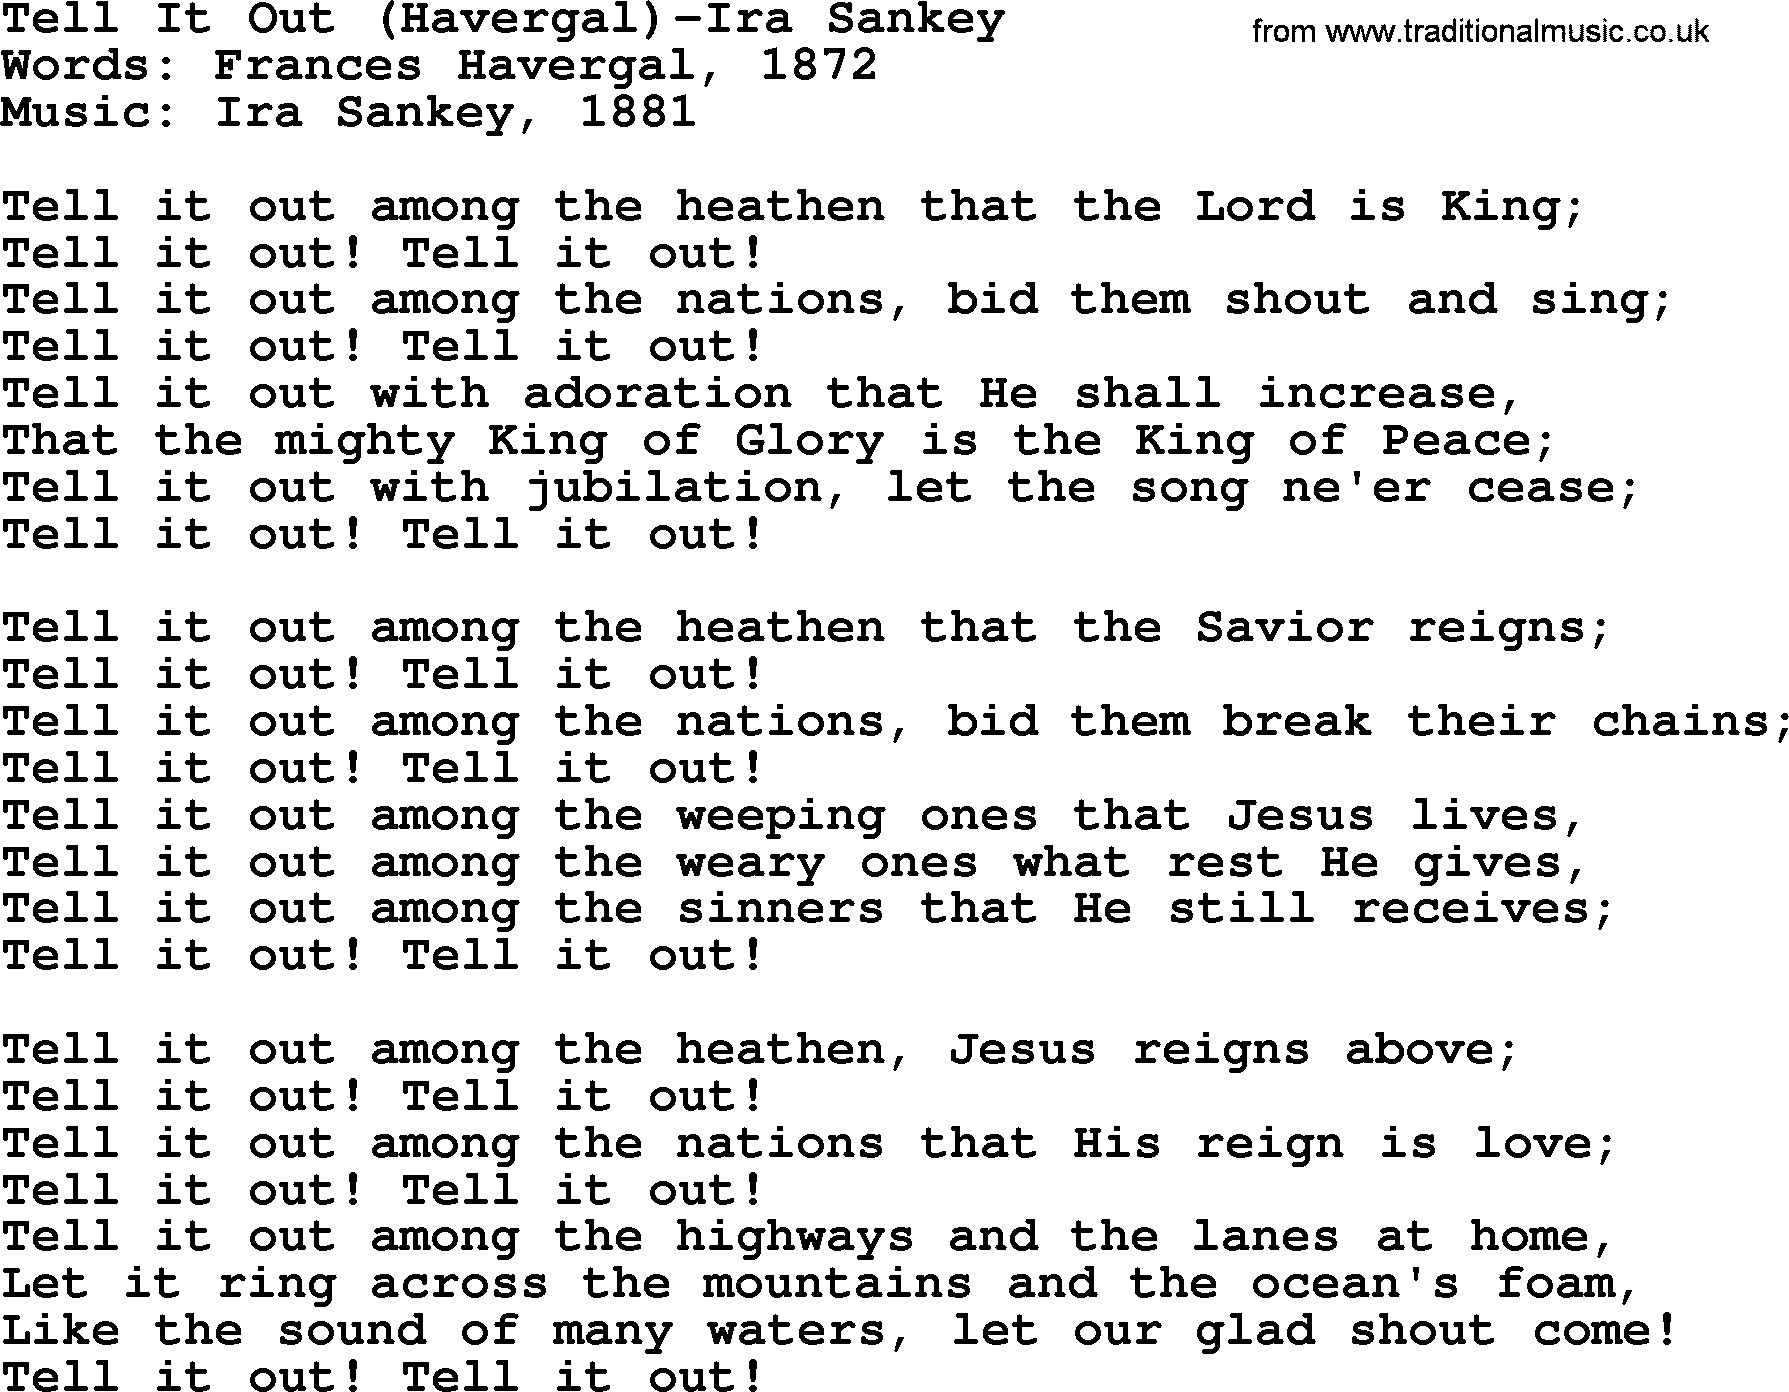 Ira Sankey hymn: Tell It Out (Havergal)-Ira Sankey, lyrics